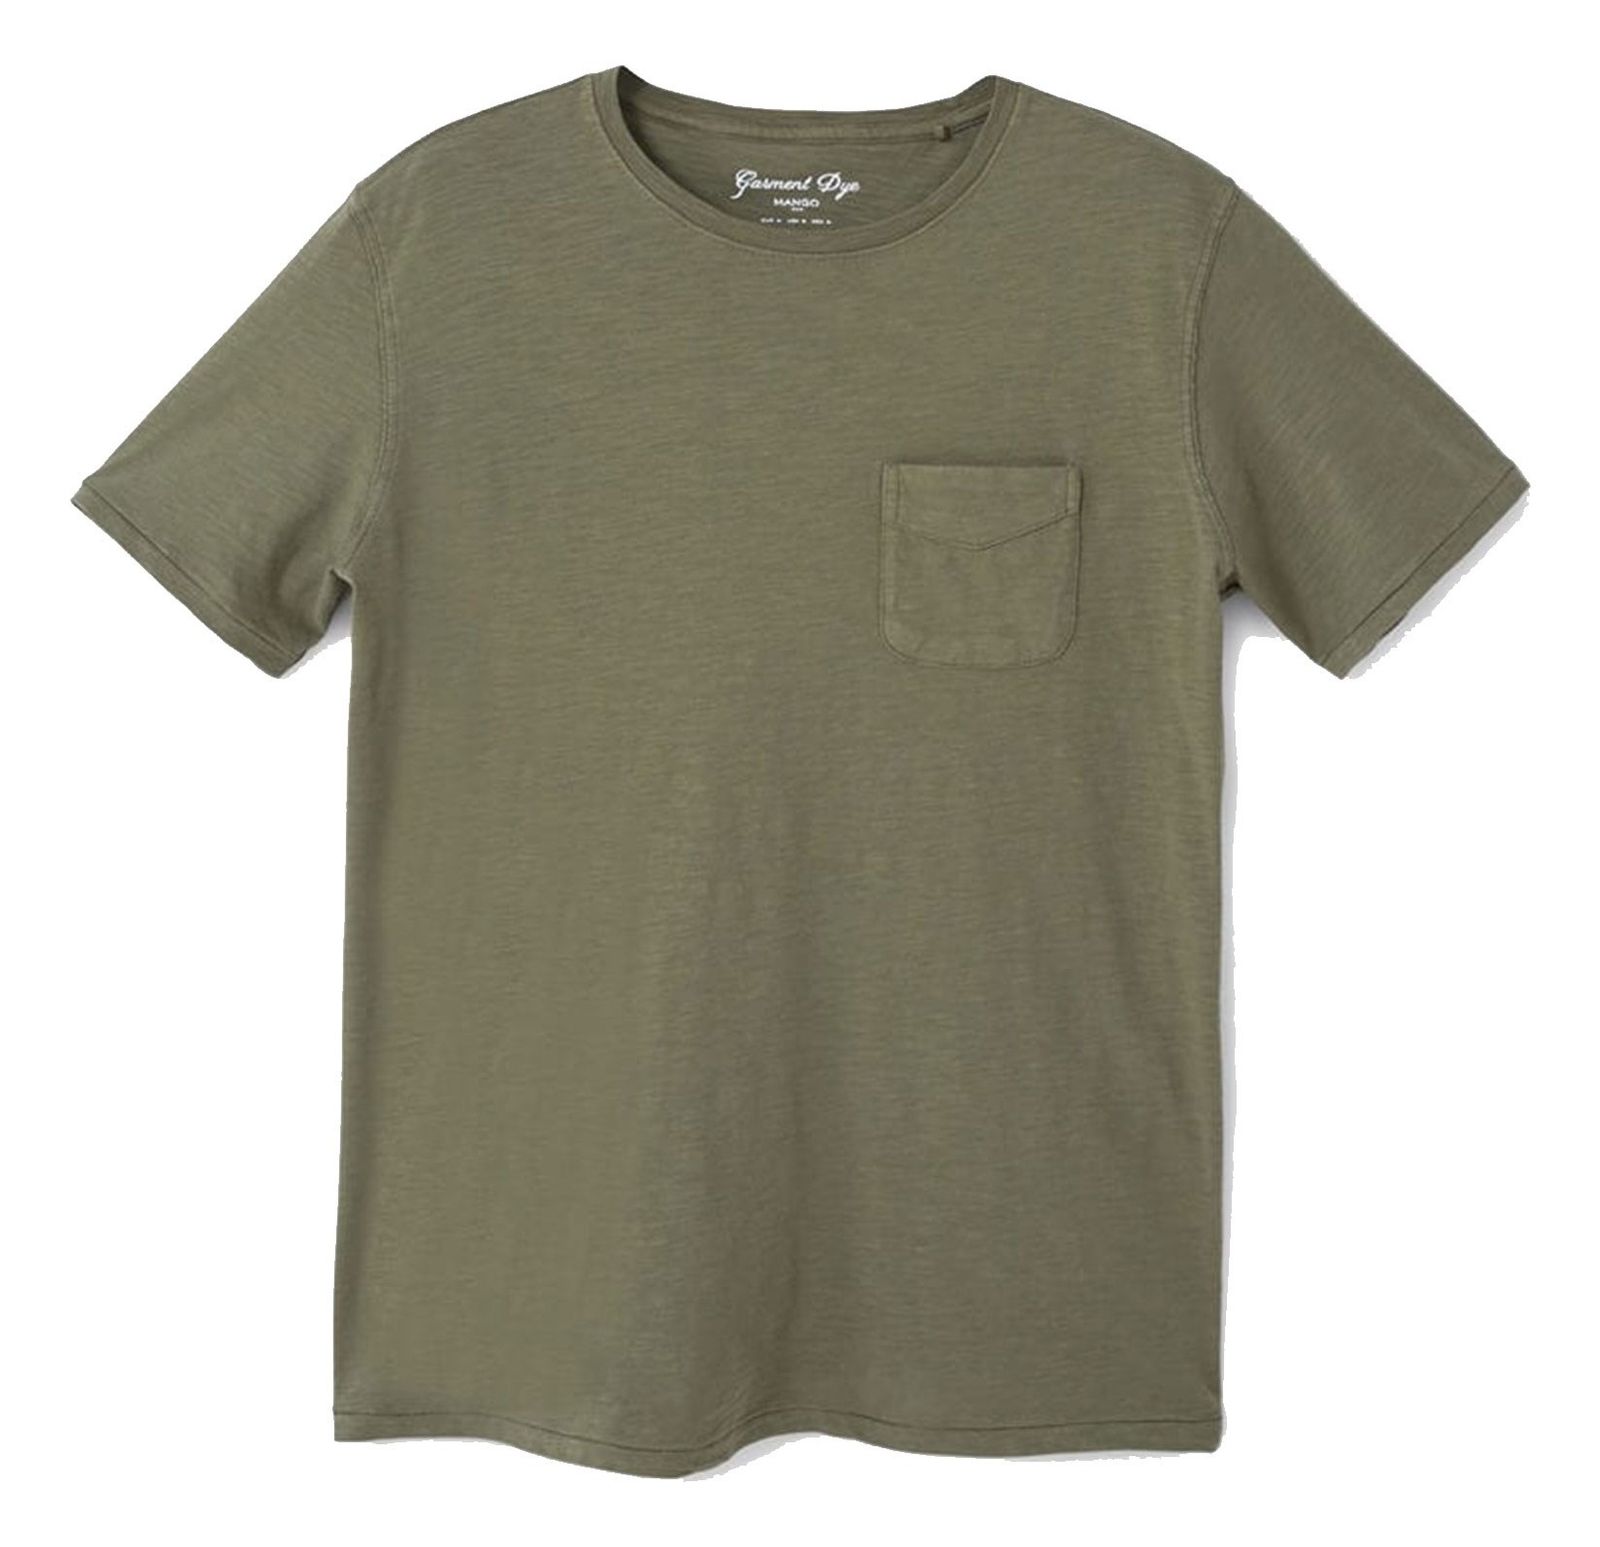 تی شرت نخی یقه گرد مردانه - مانگو - زيتوني - 1